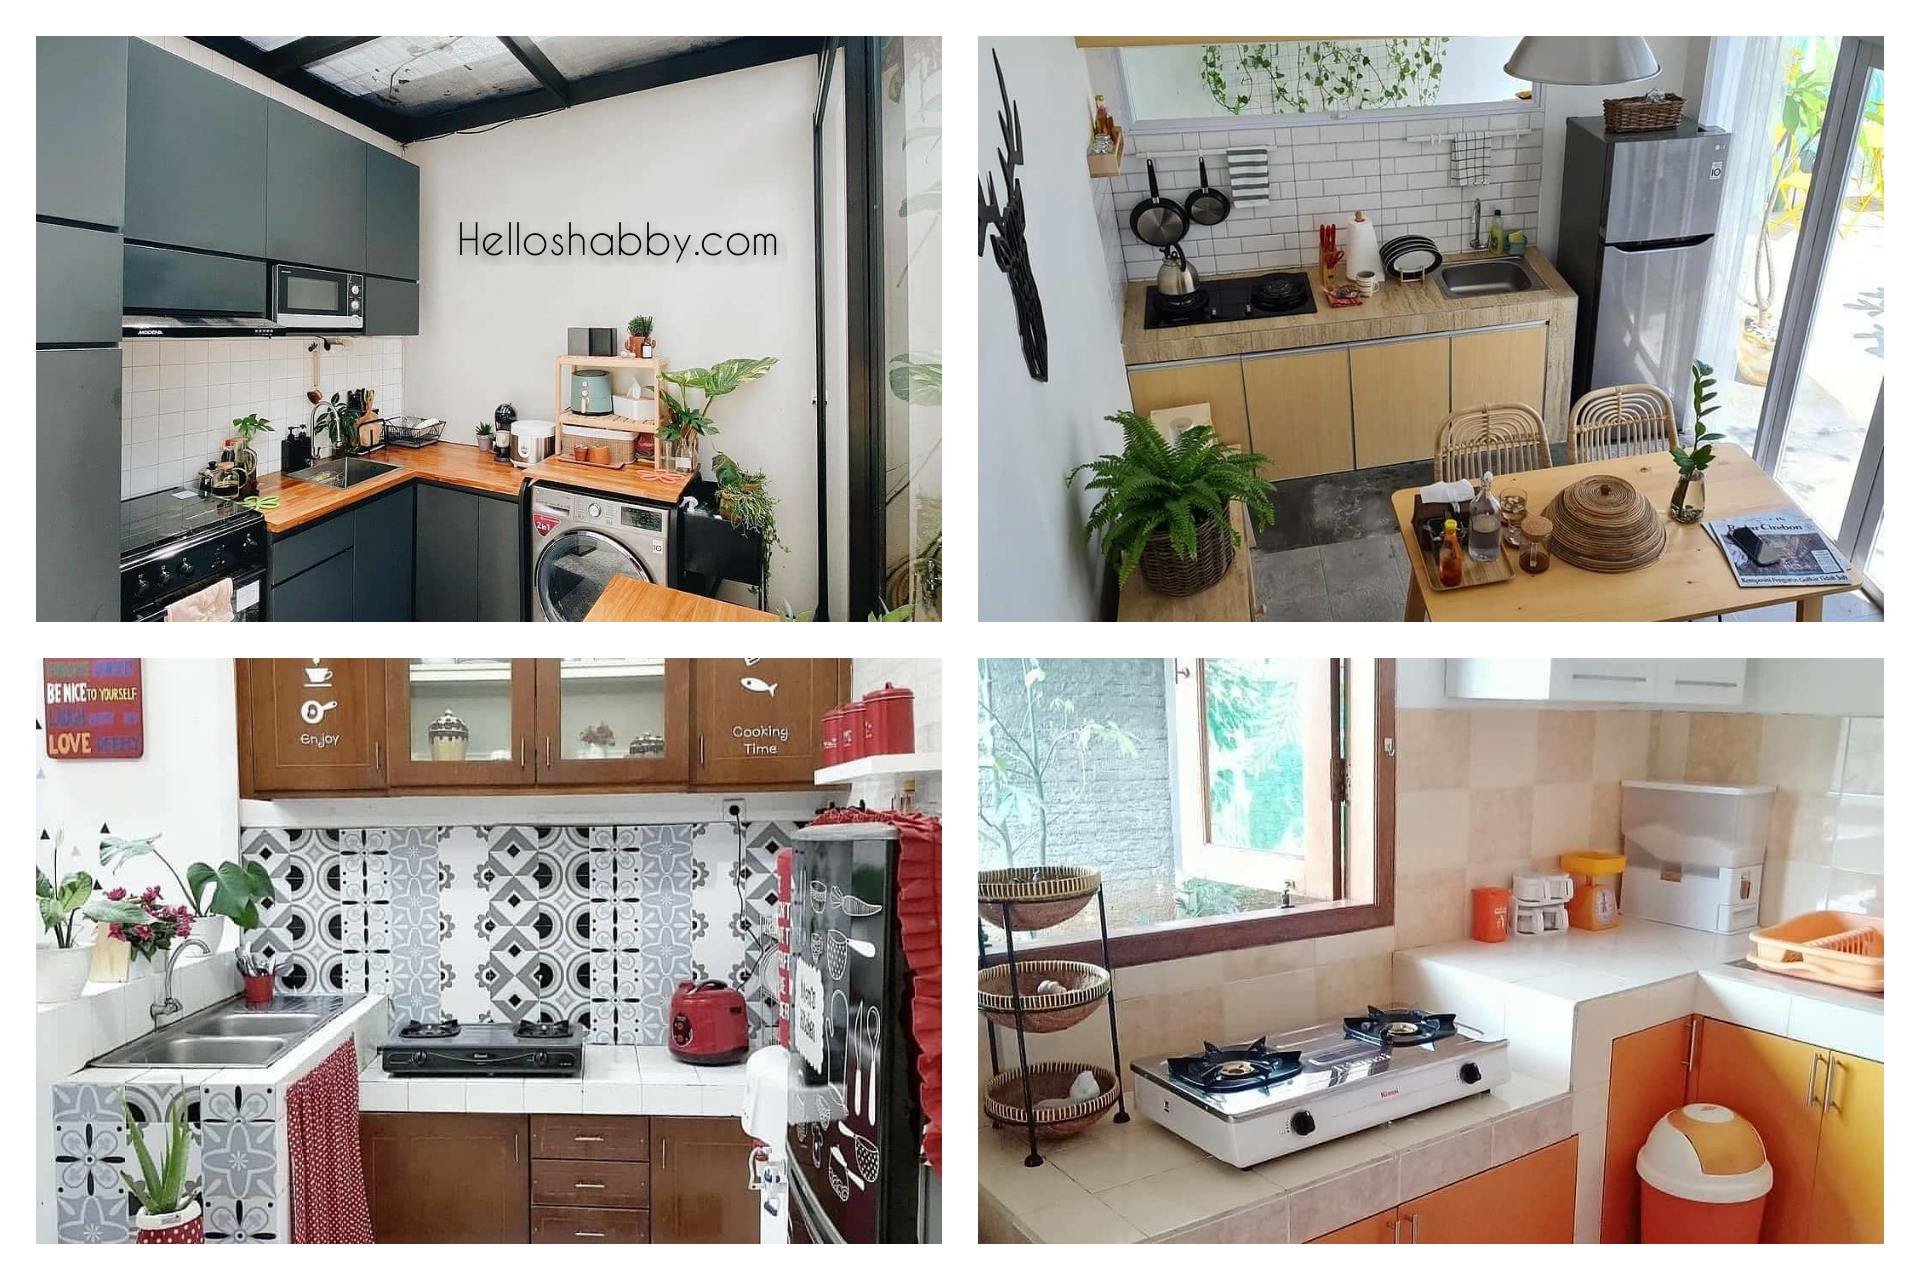 6 Desain Dapur Minimalis Type 36 Yang Cantik Dan Modern HelloShabbycom Interior And Exterior Solutions